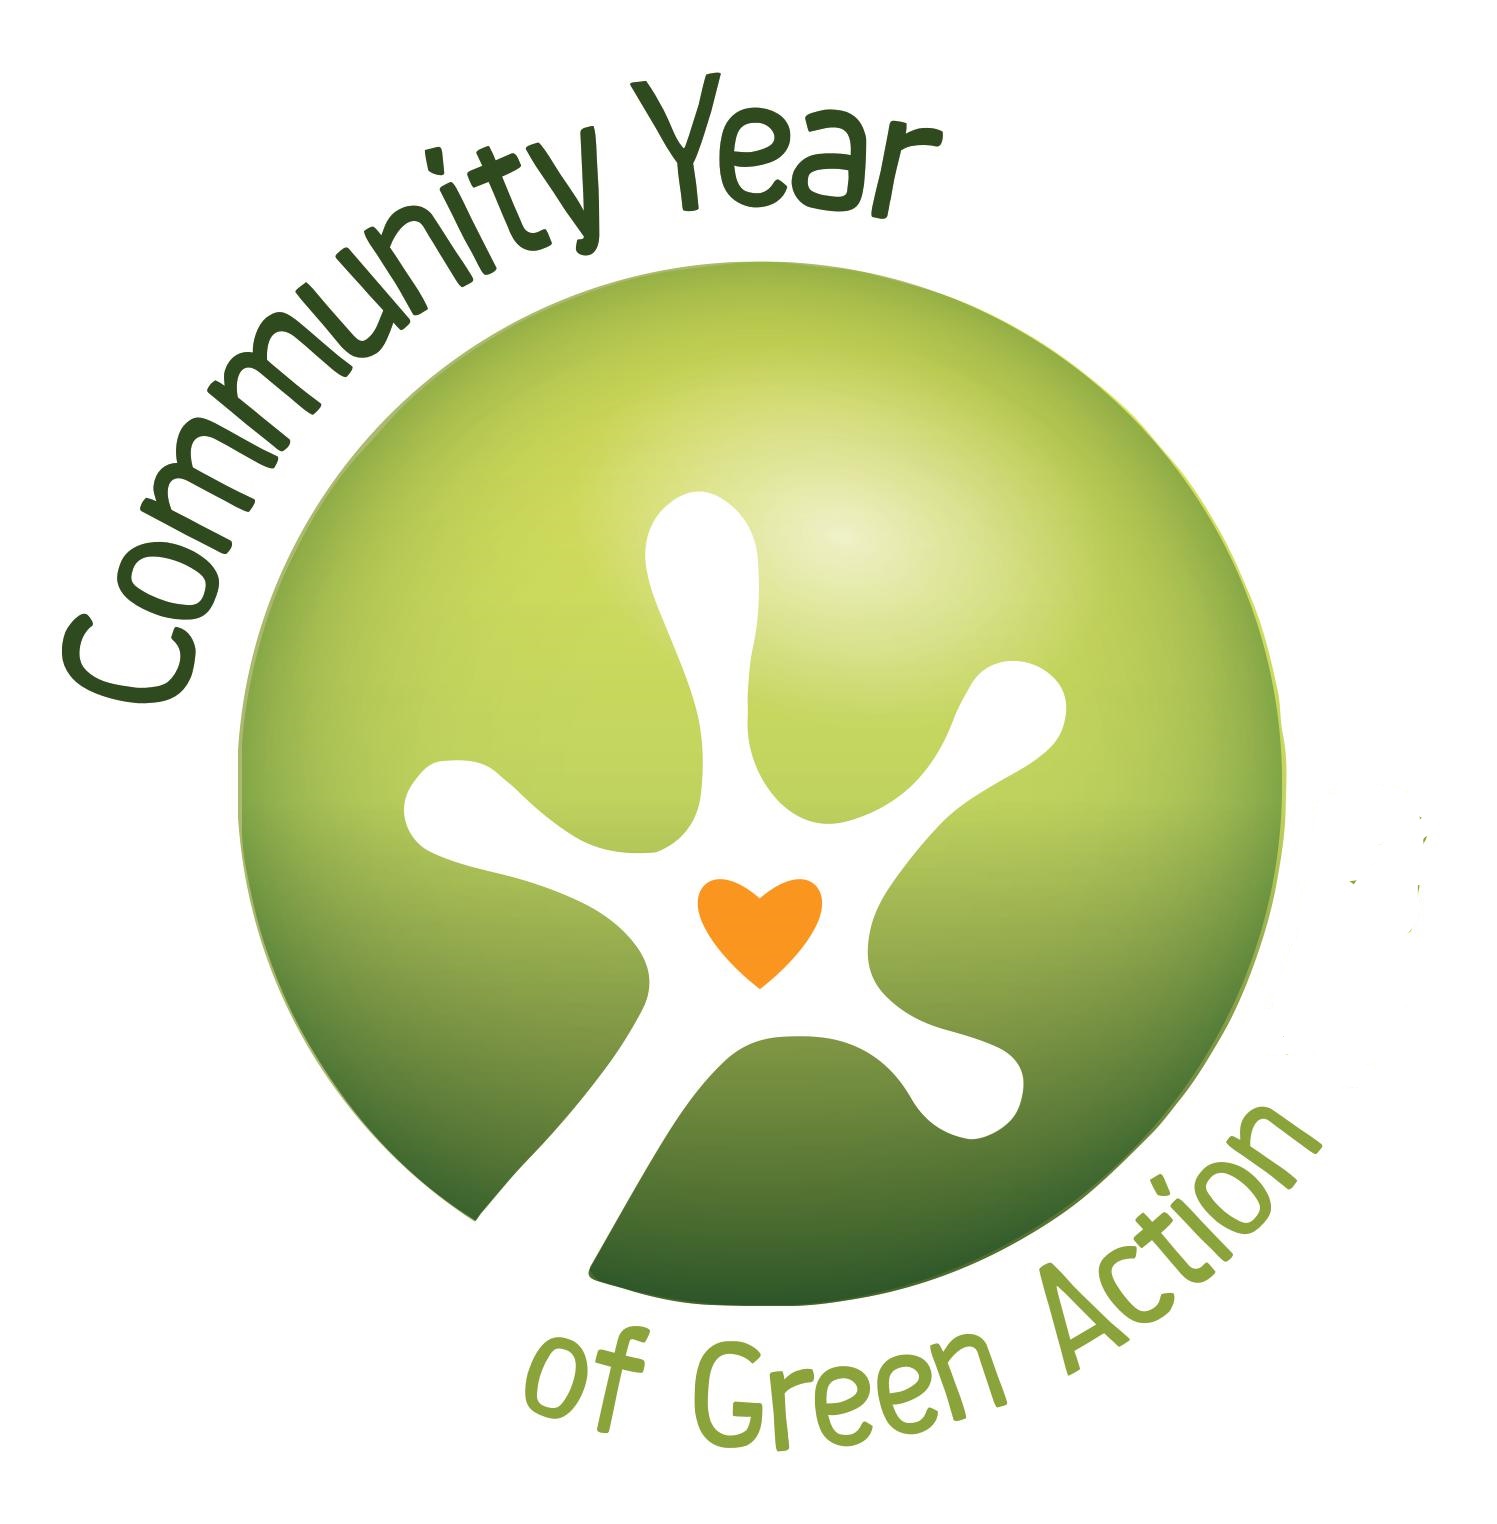 year og green action